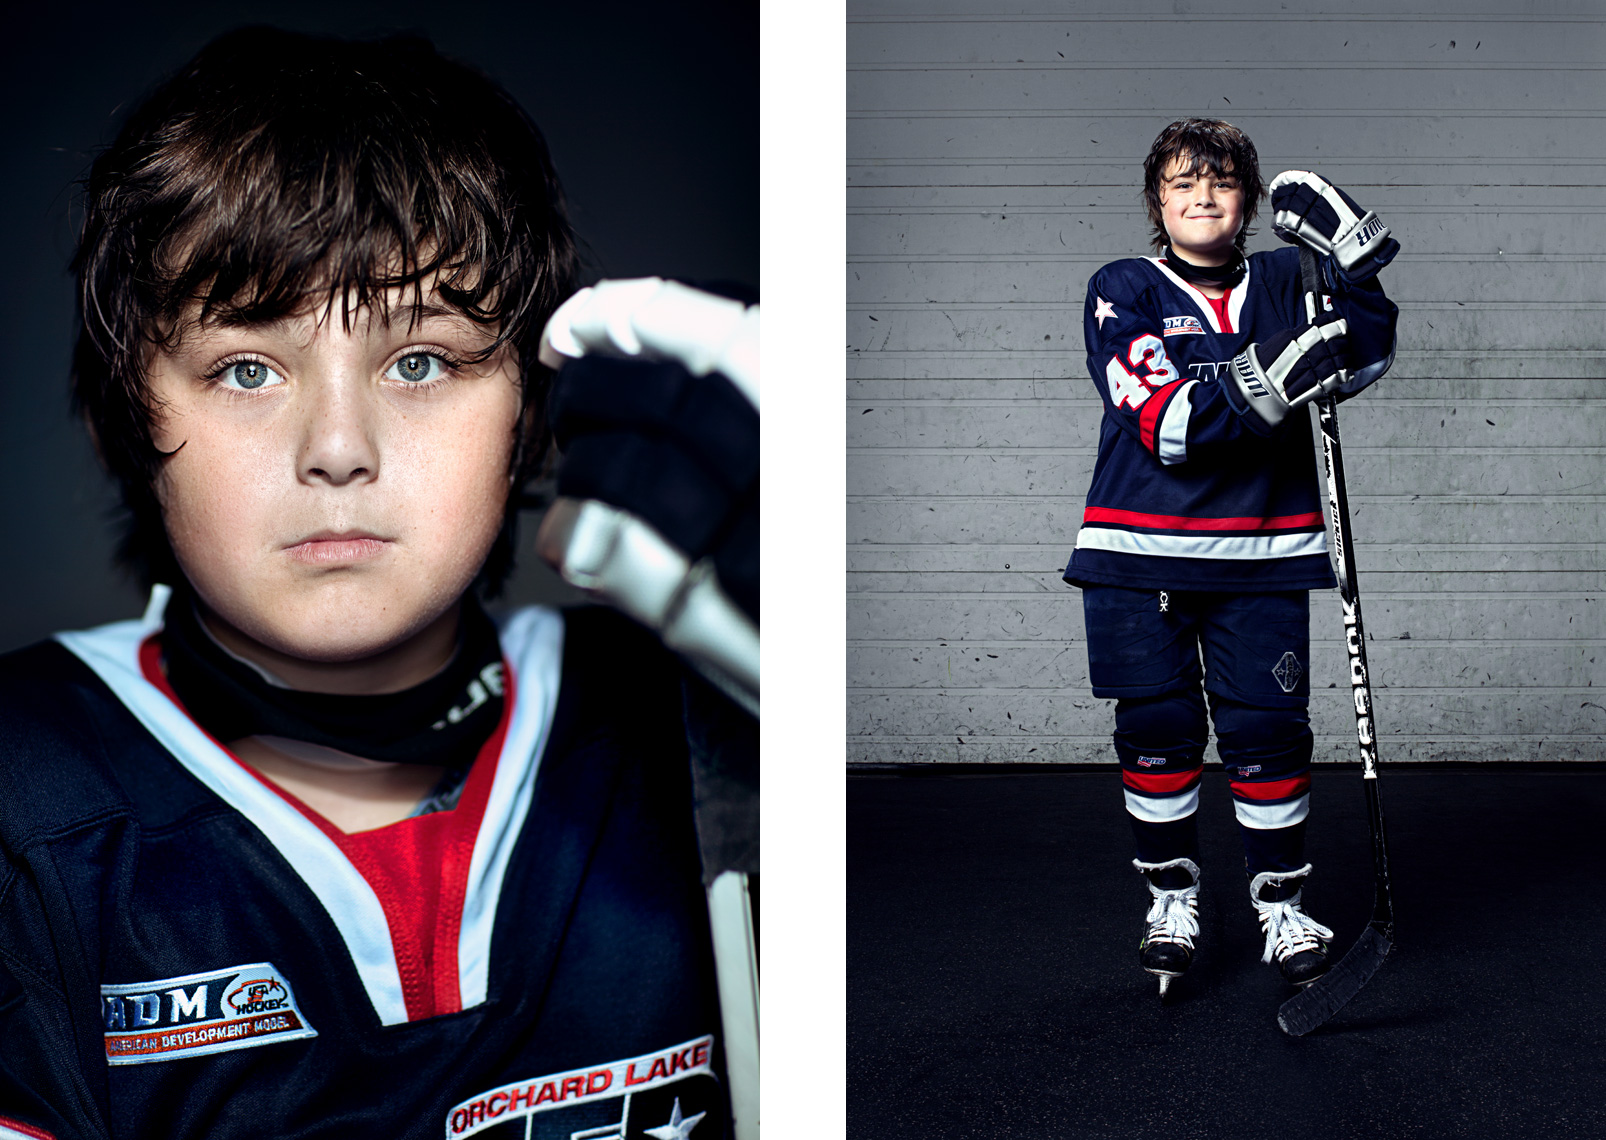 Sports Photographer STEVE BOYLE - ESPN Youth Ice Hockey